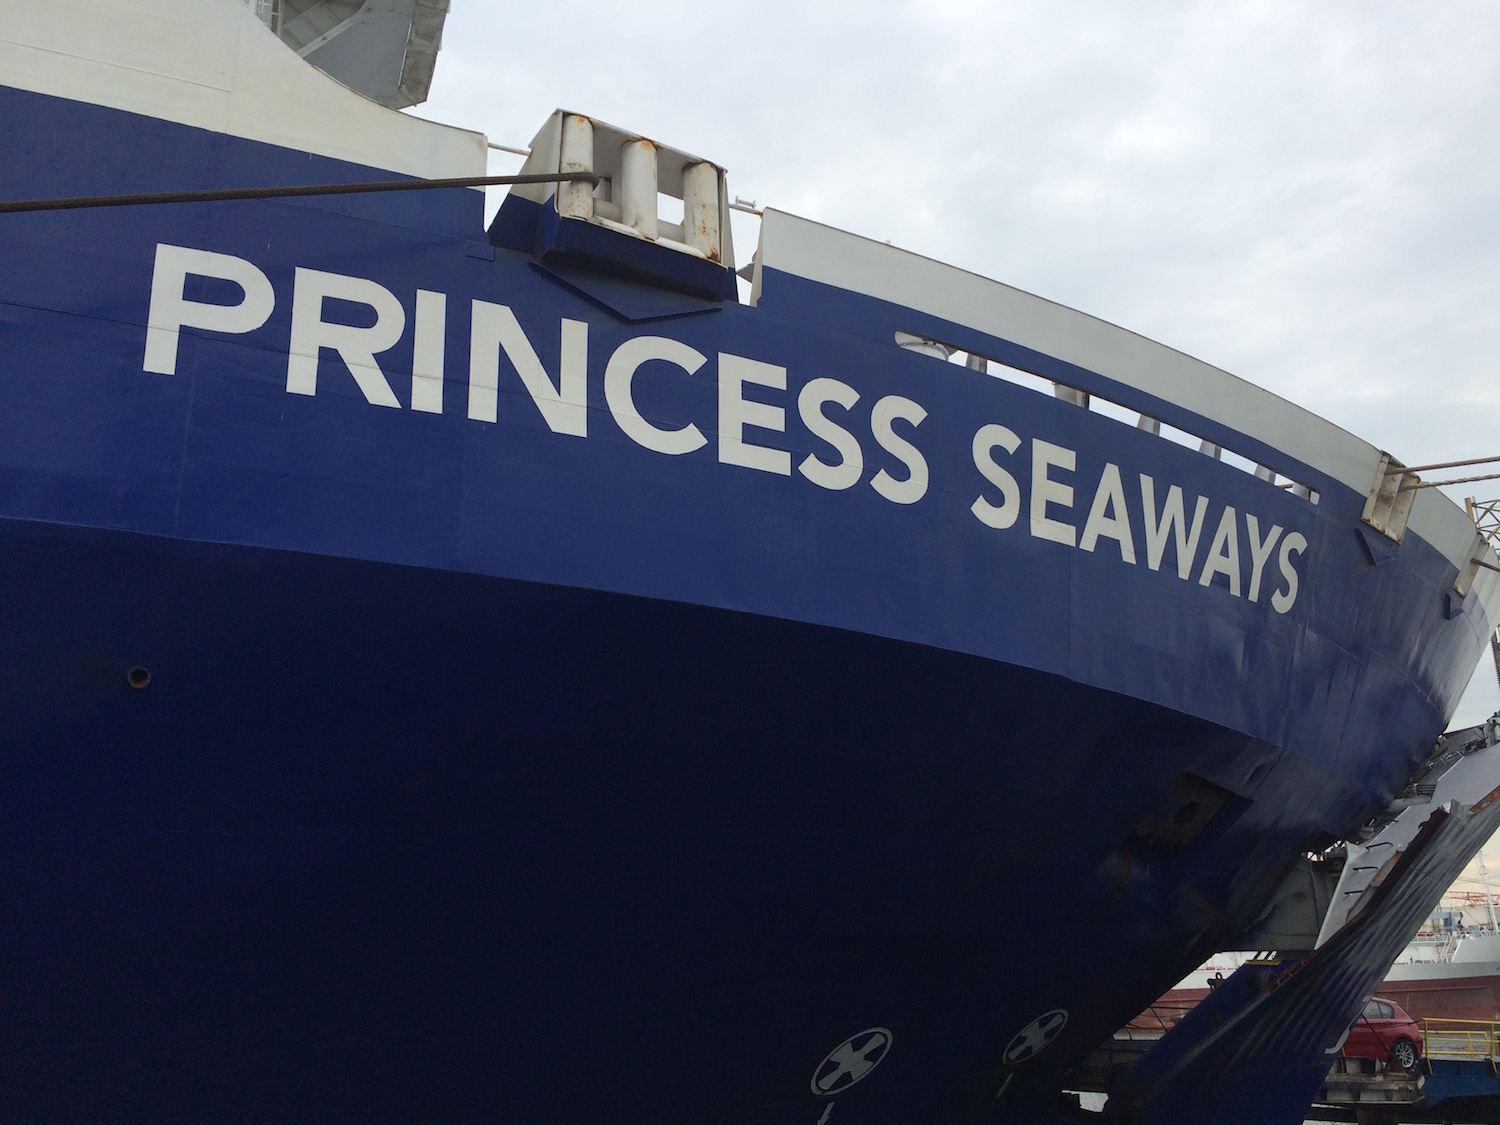 Princess Seaways